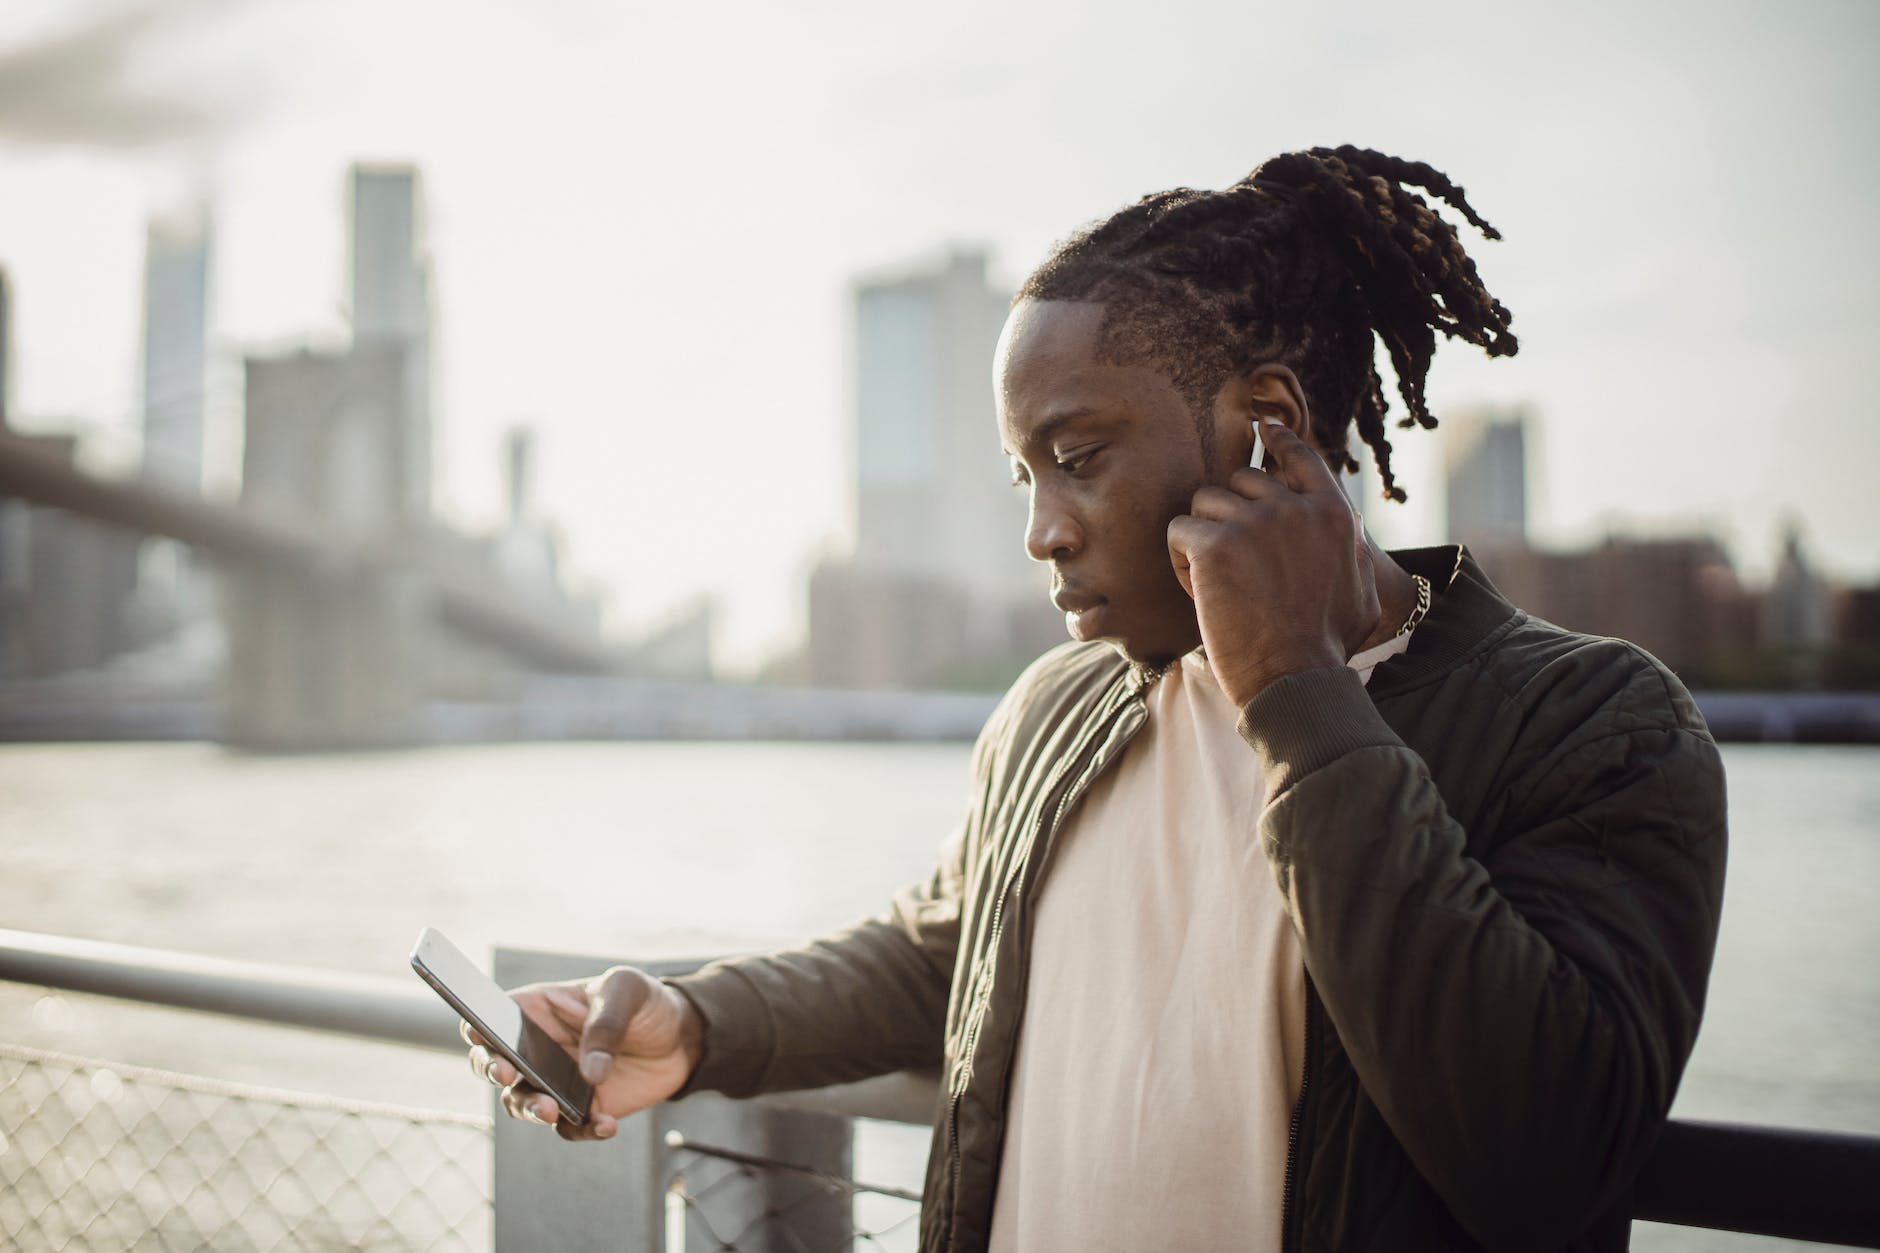 melancholic black man with smartphone listening to music in earphones